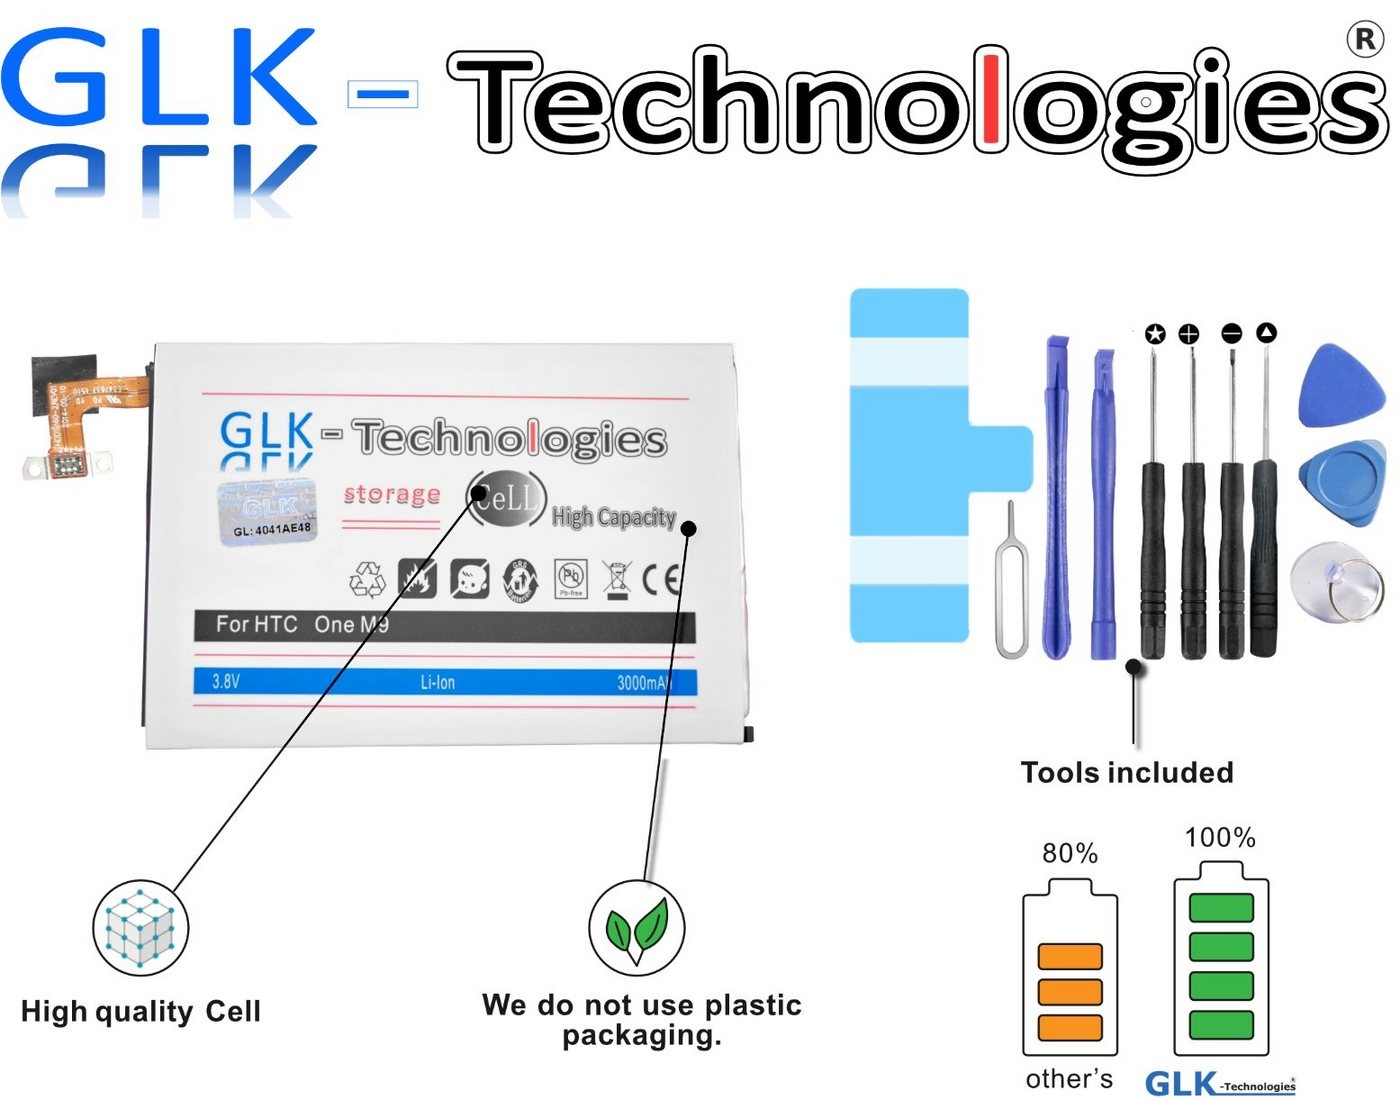 GLK-Technologies High Power Ersatzakku für HTC One M9 / M9+ Plus B0PGE100 35H00236, Original GLK-Technologies Battery, accu, 3000 mAh Akku, inkl. Werkzeug Set Kit NEU Smartphone-Akku 3000 mAh (3.8 V)